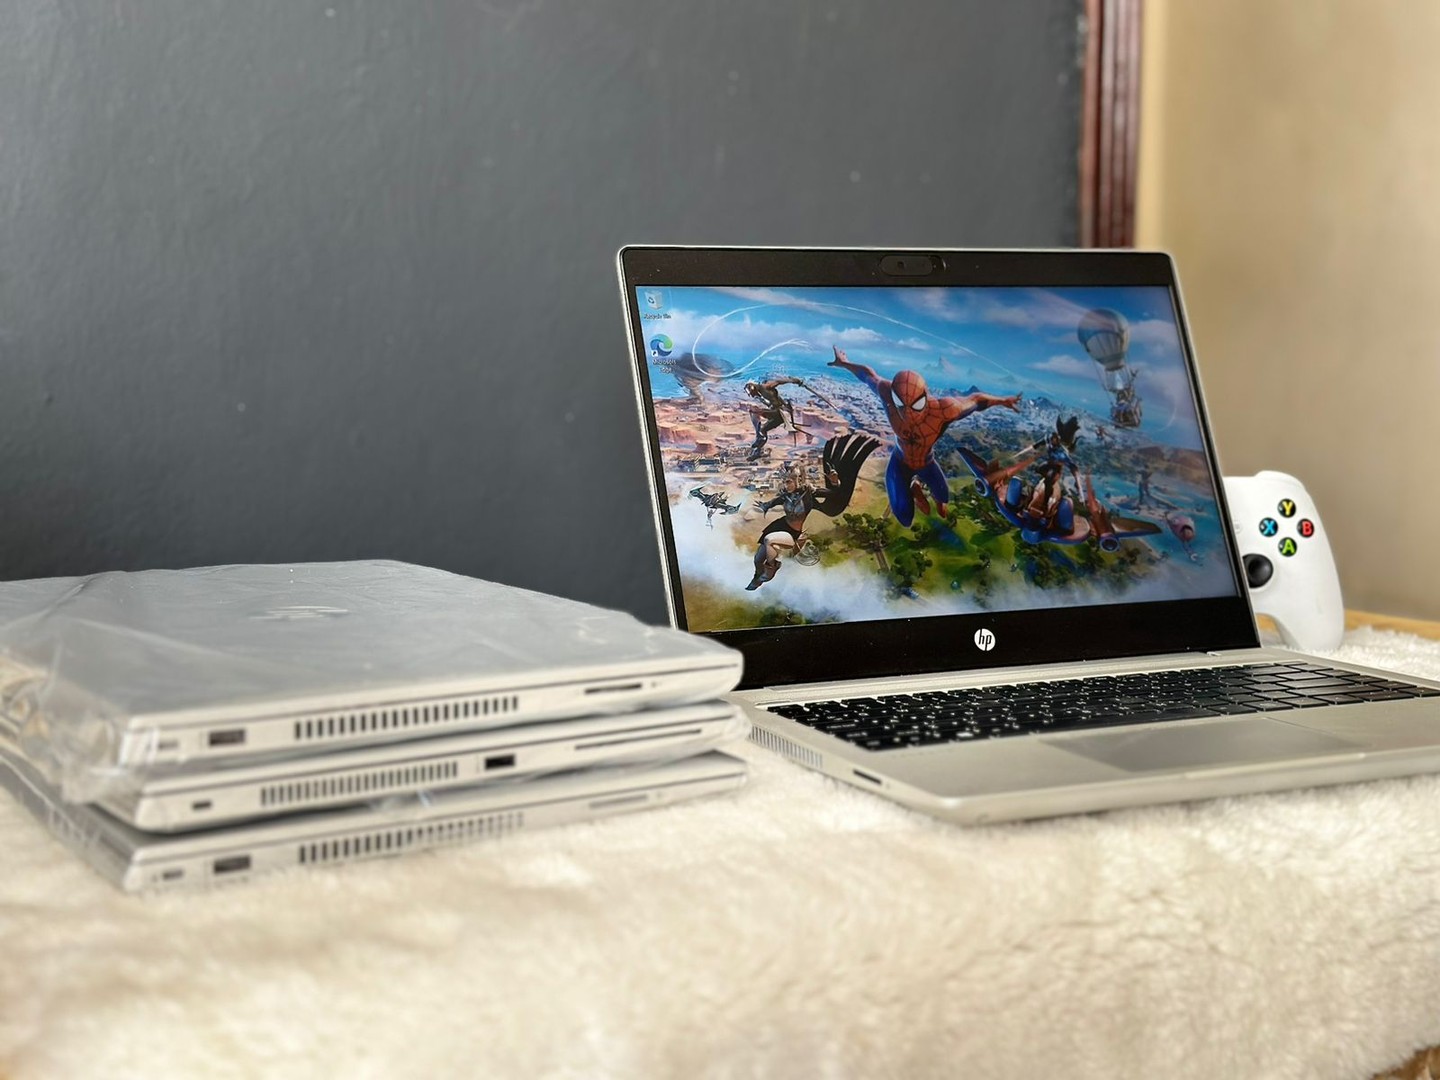 computadoras y laptops - Laptop Hp Probook G7, RYZEN 5, i5 10ma, 8gb Ram, 256 SSD 0